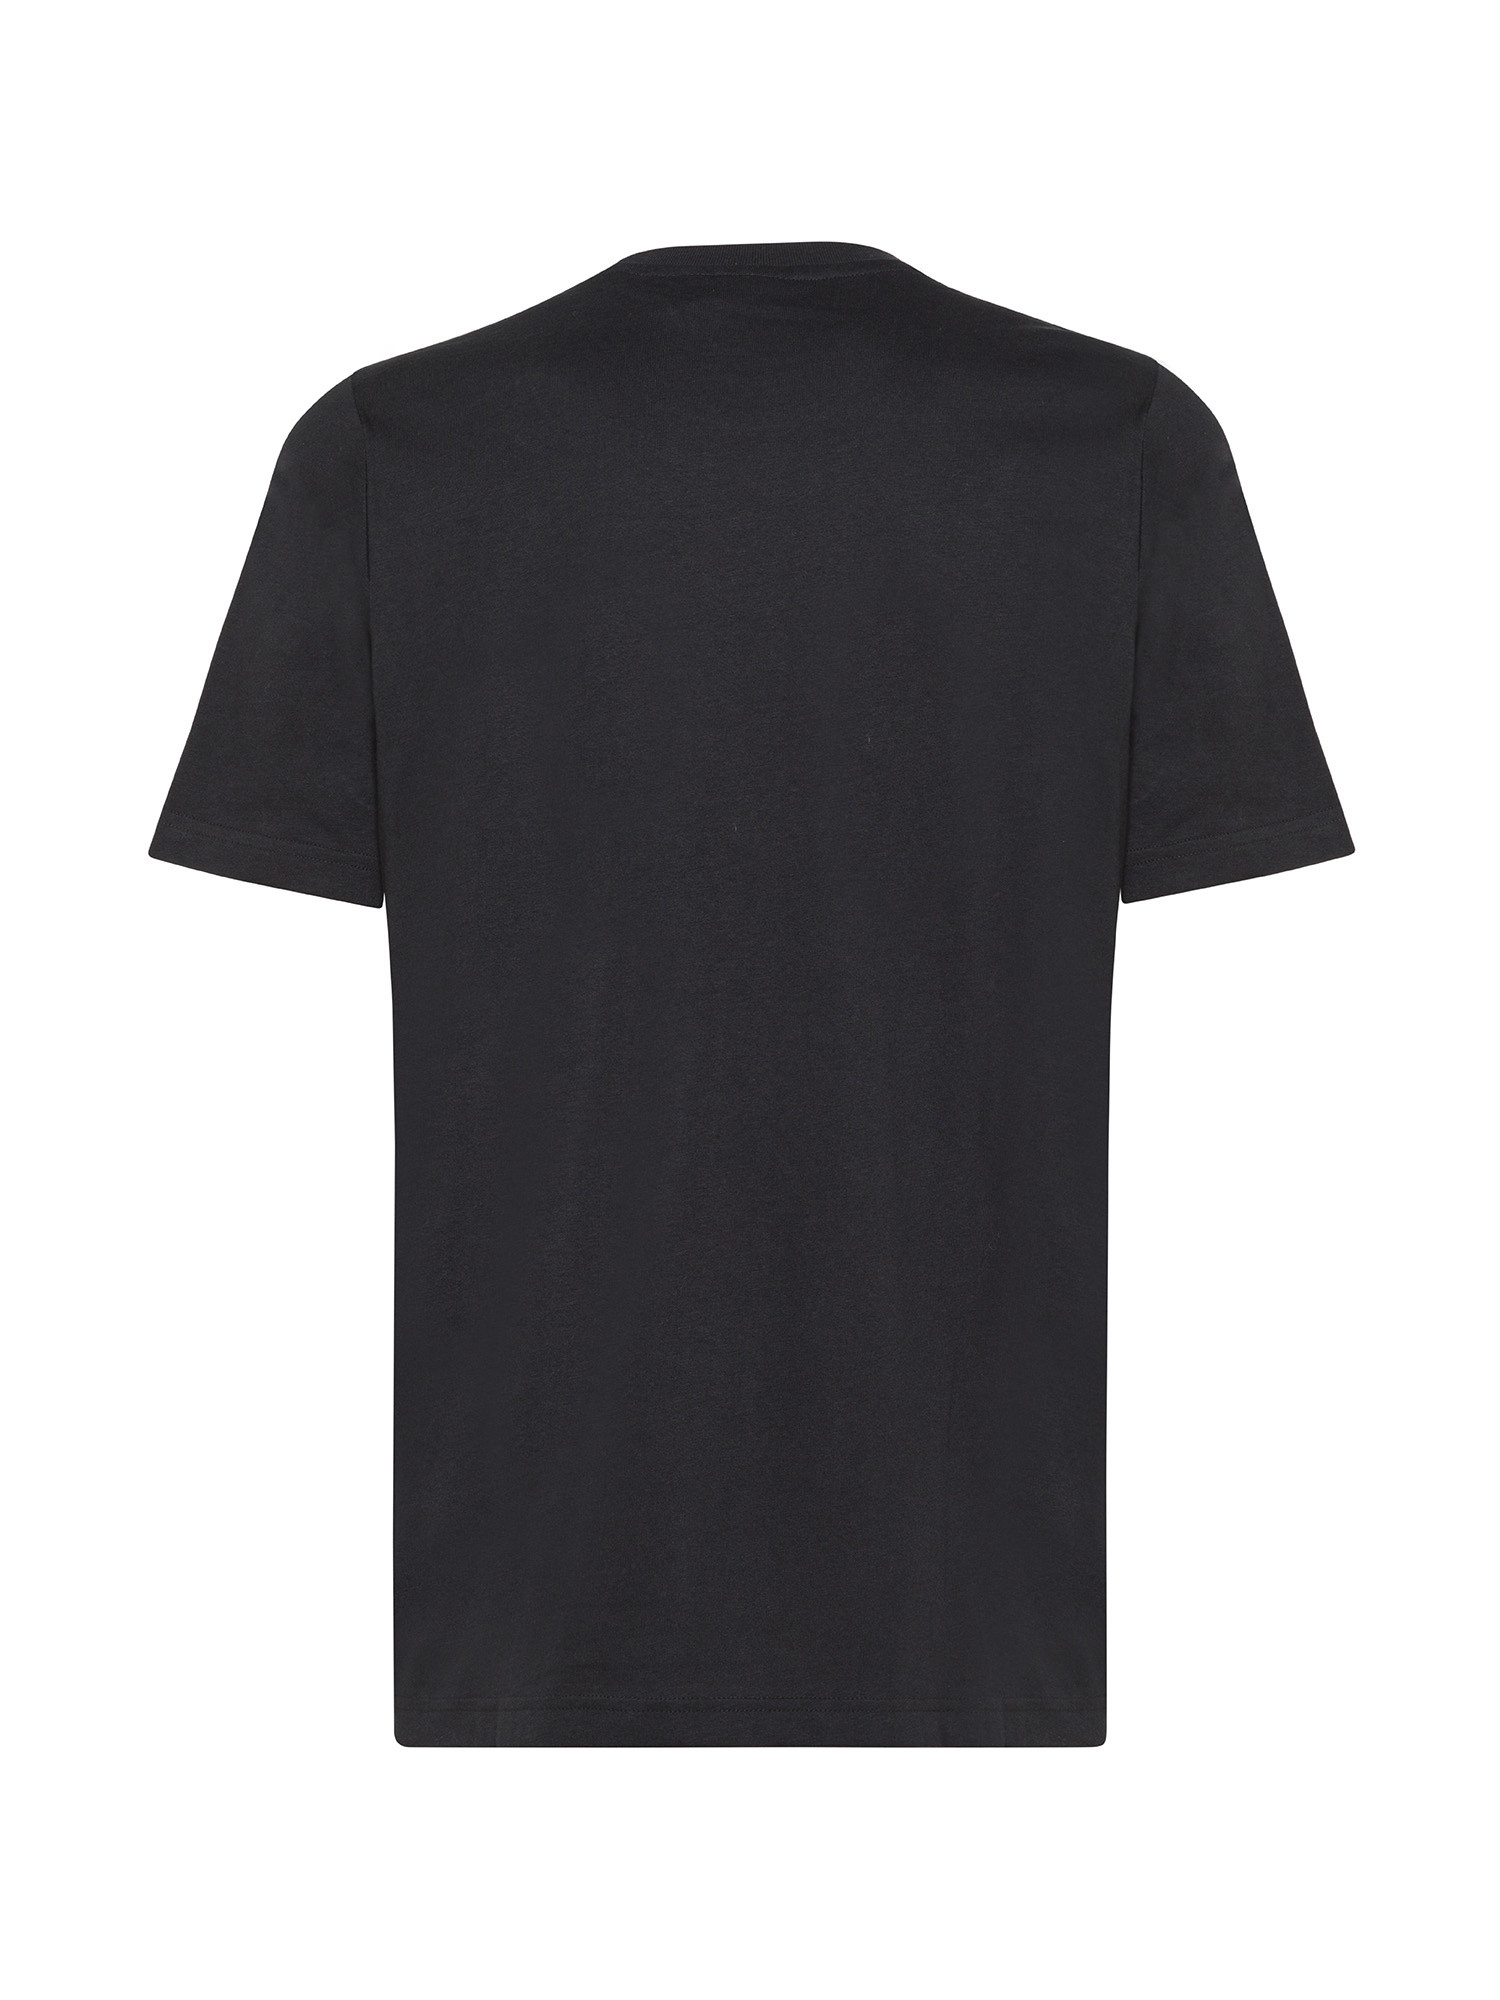 Adidas - Graphic Camo T-shirt, Black, large image number 1